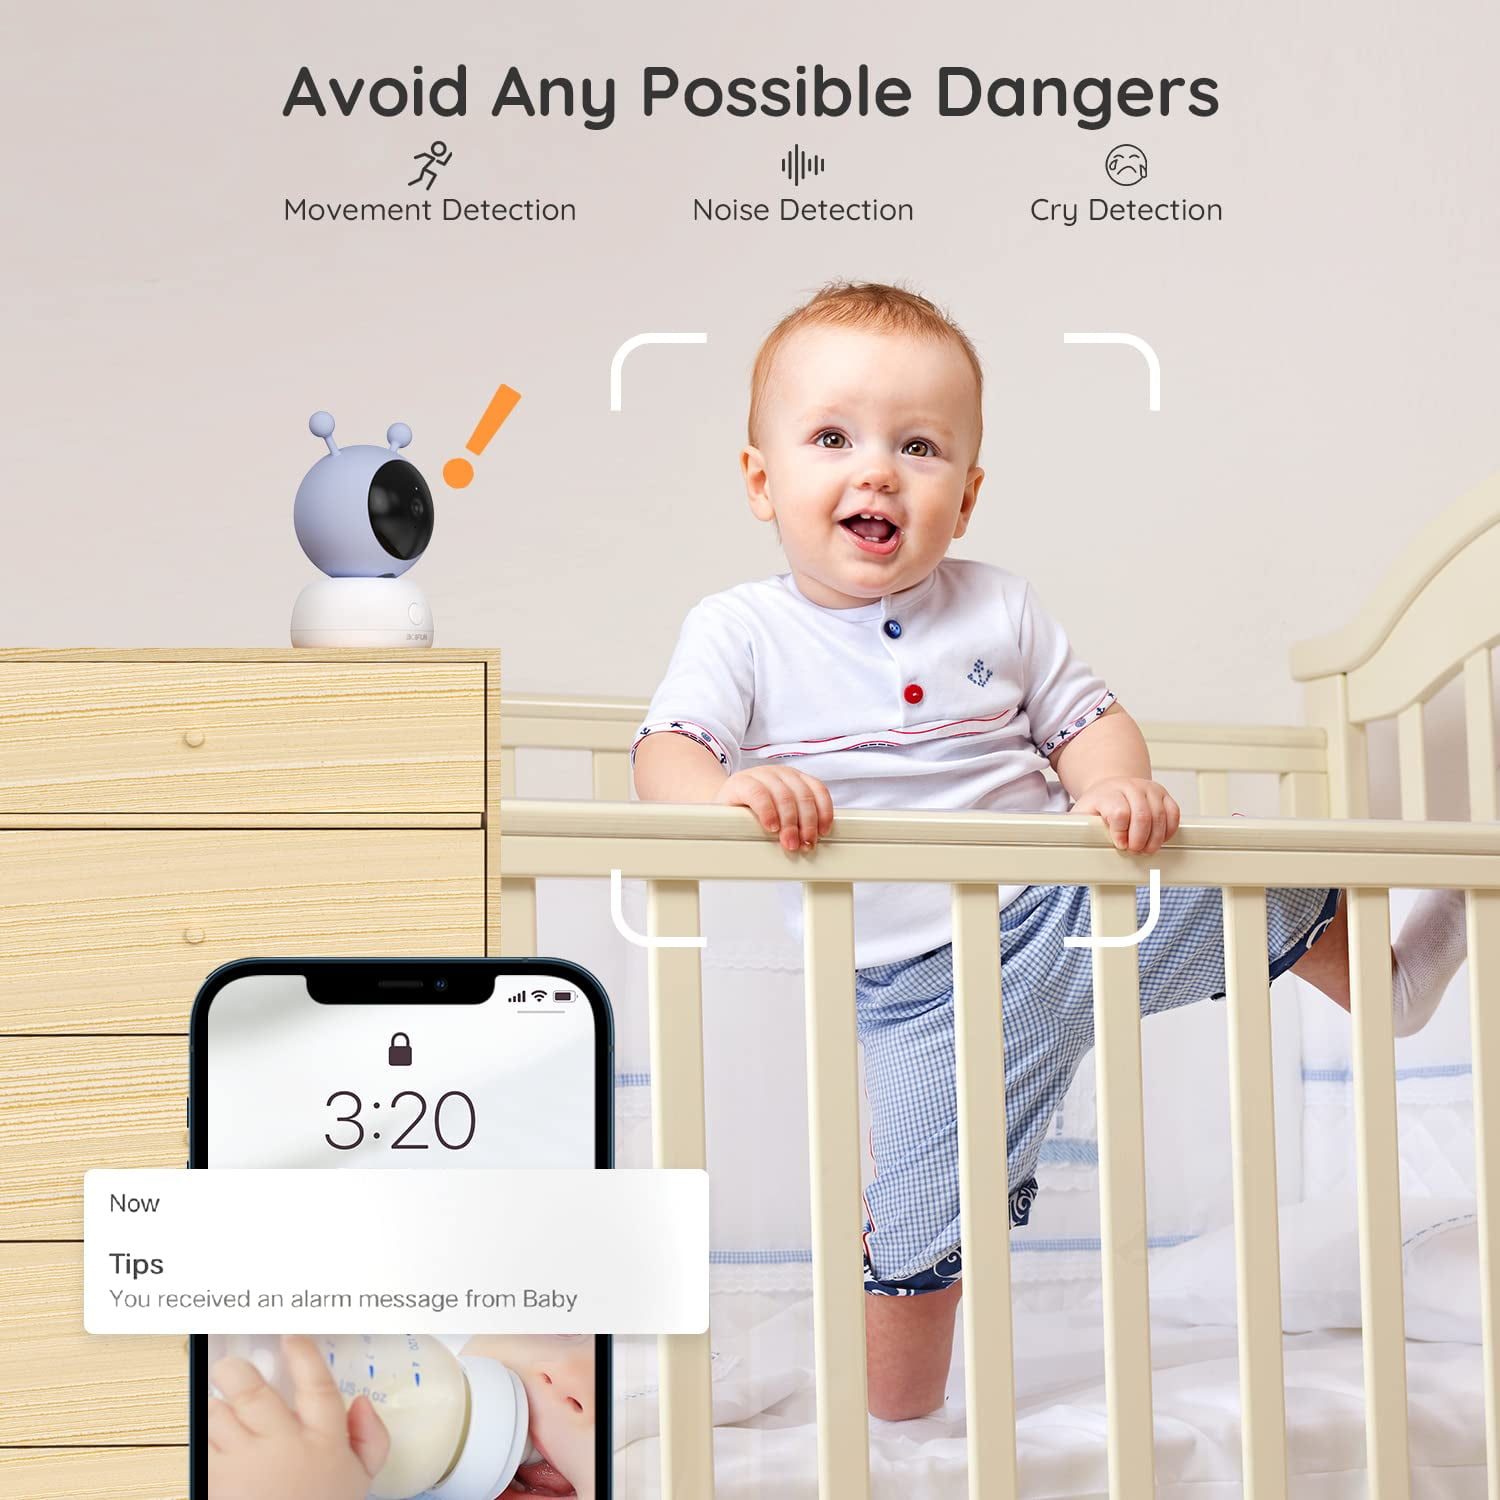 Boifun Baby Monitor and Camera- Brand New